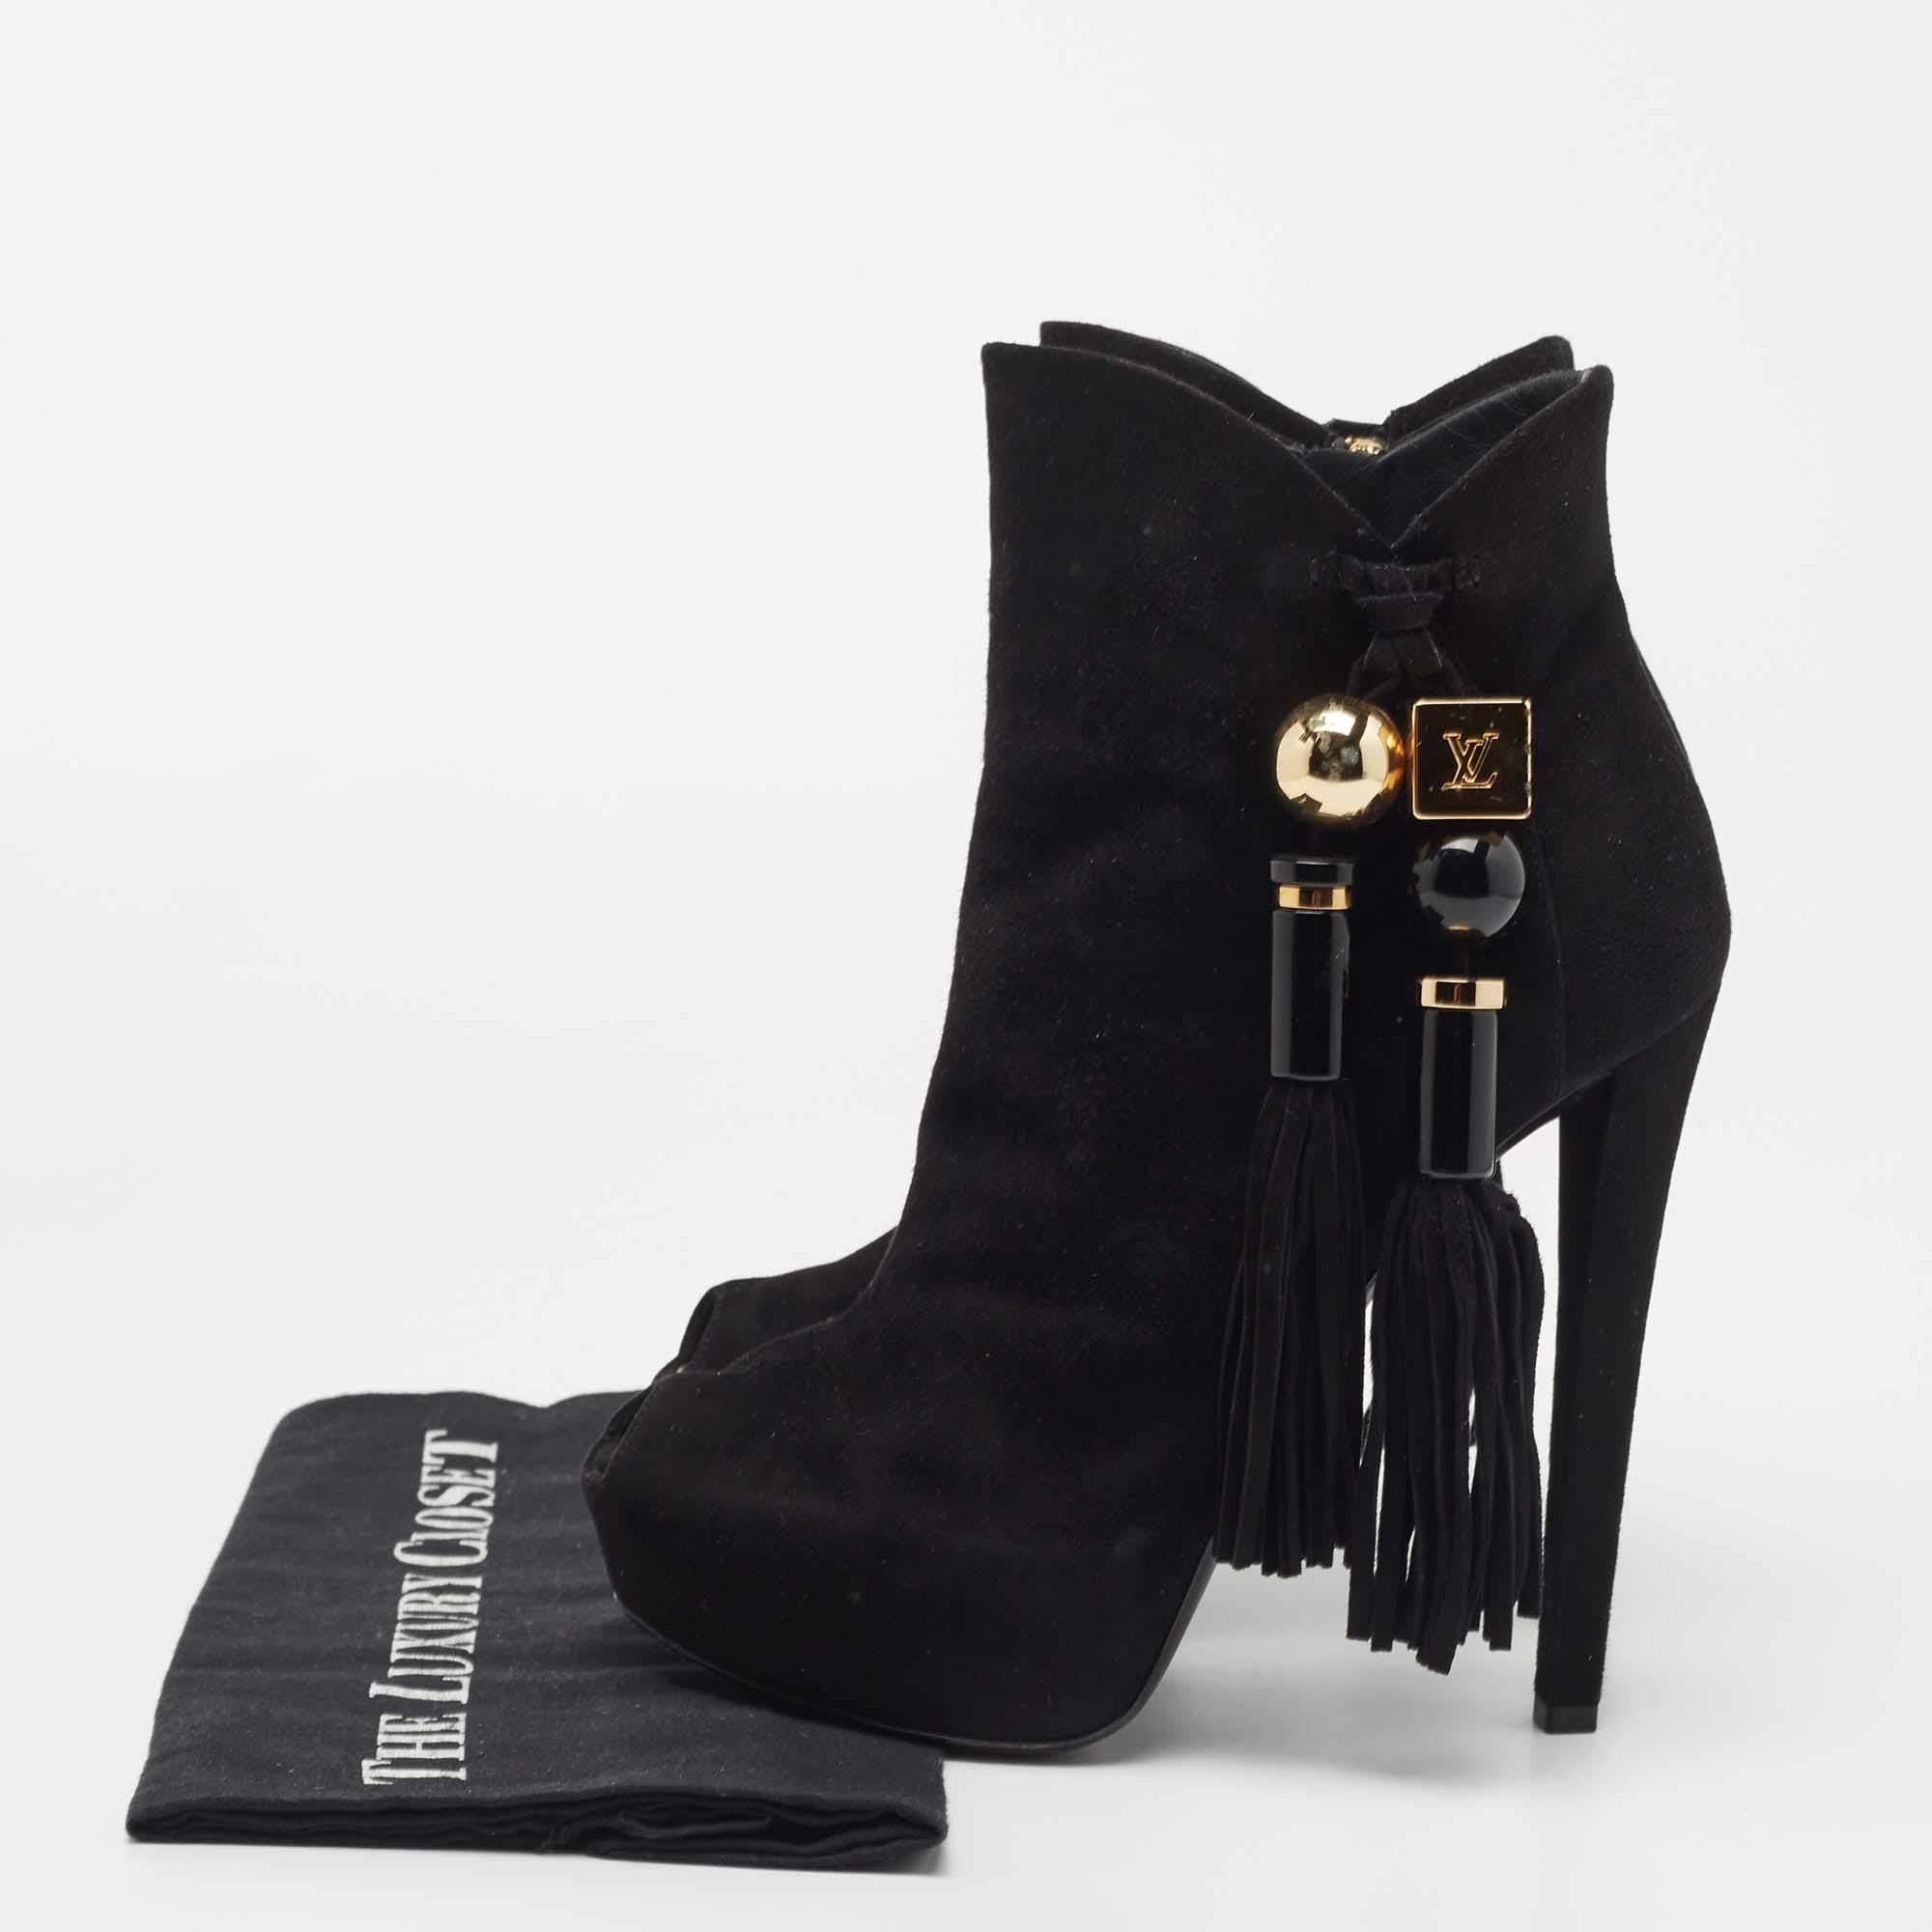 Louis Vuitton Black Suede Tassel Peep Toe Ankle Booties Size 38 6